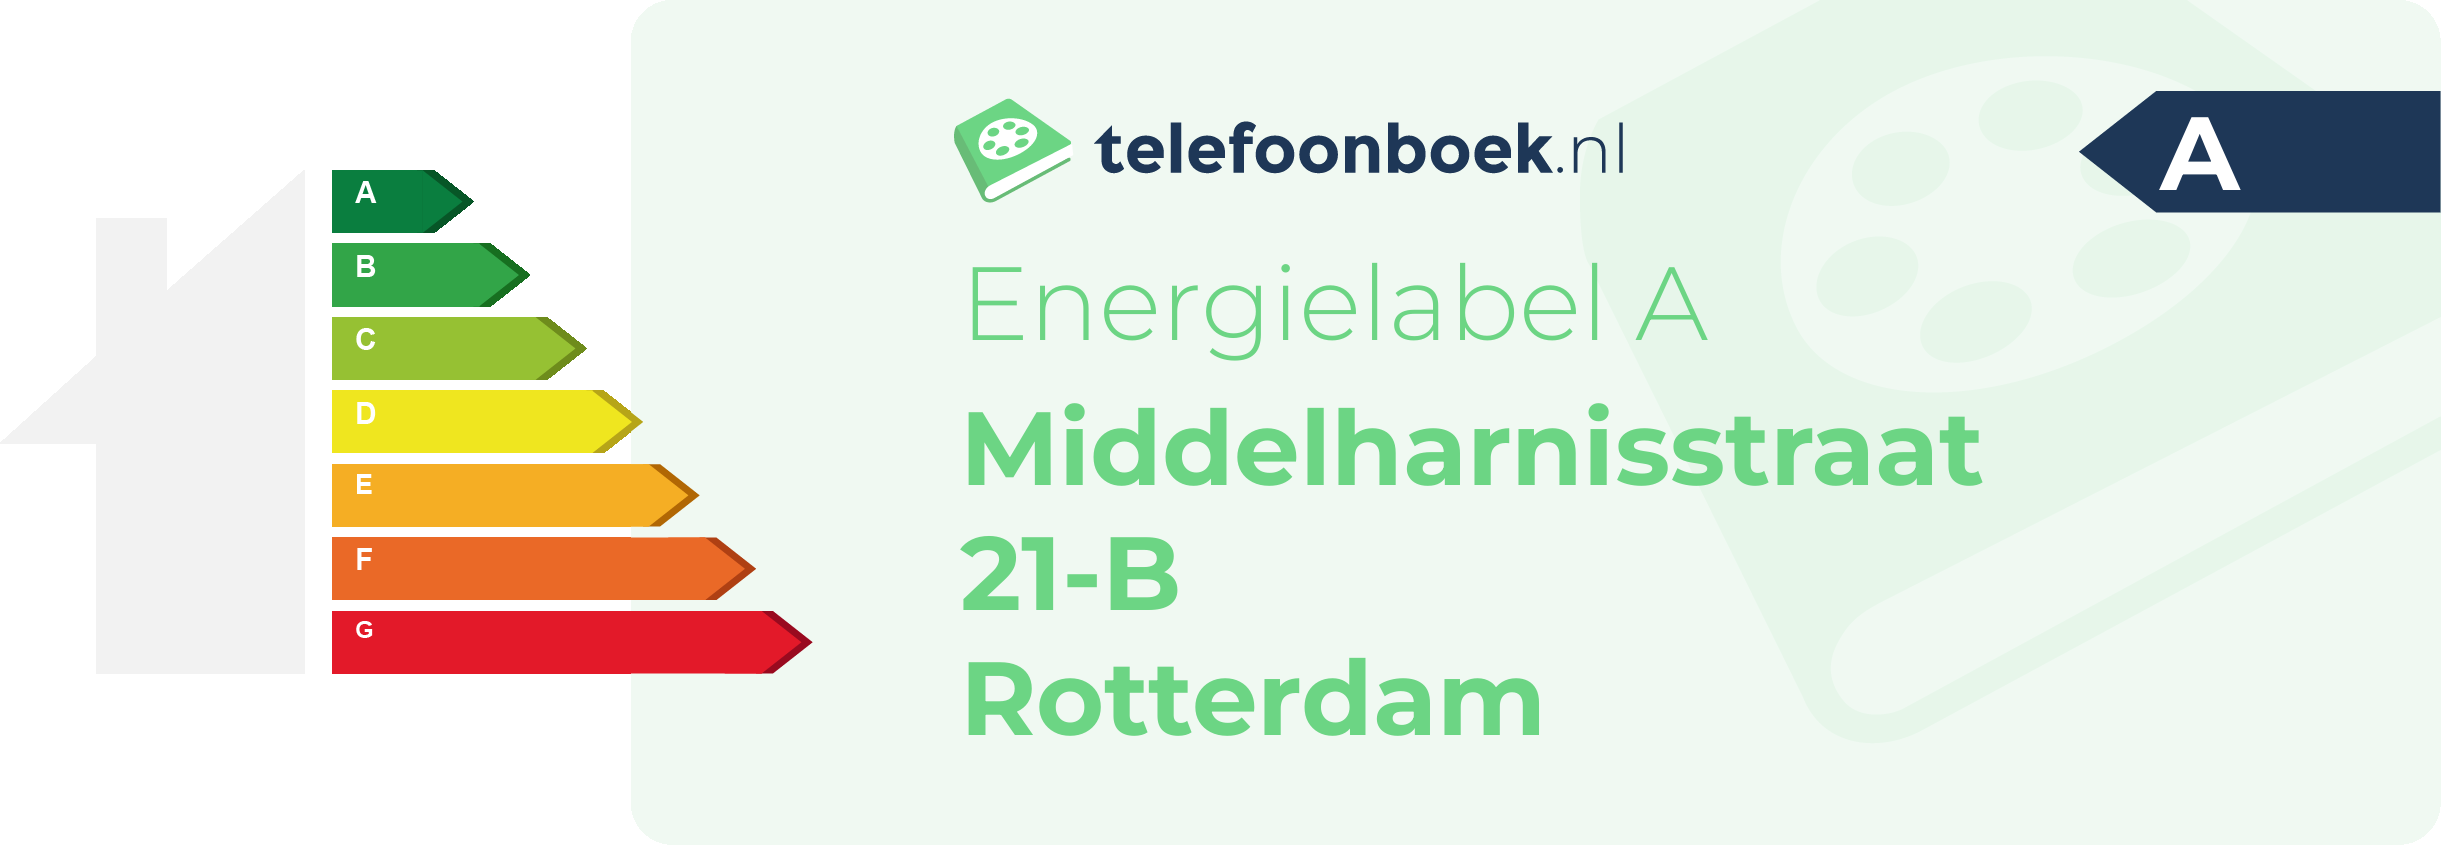 Energielabel Middelharnisstraat 21-B Rotterdam